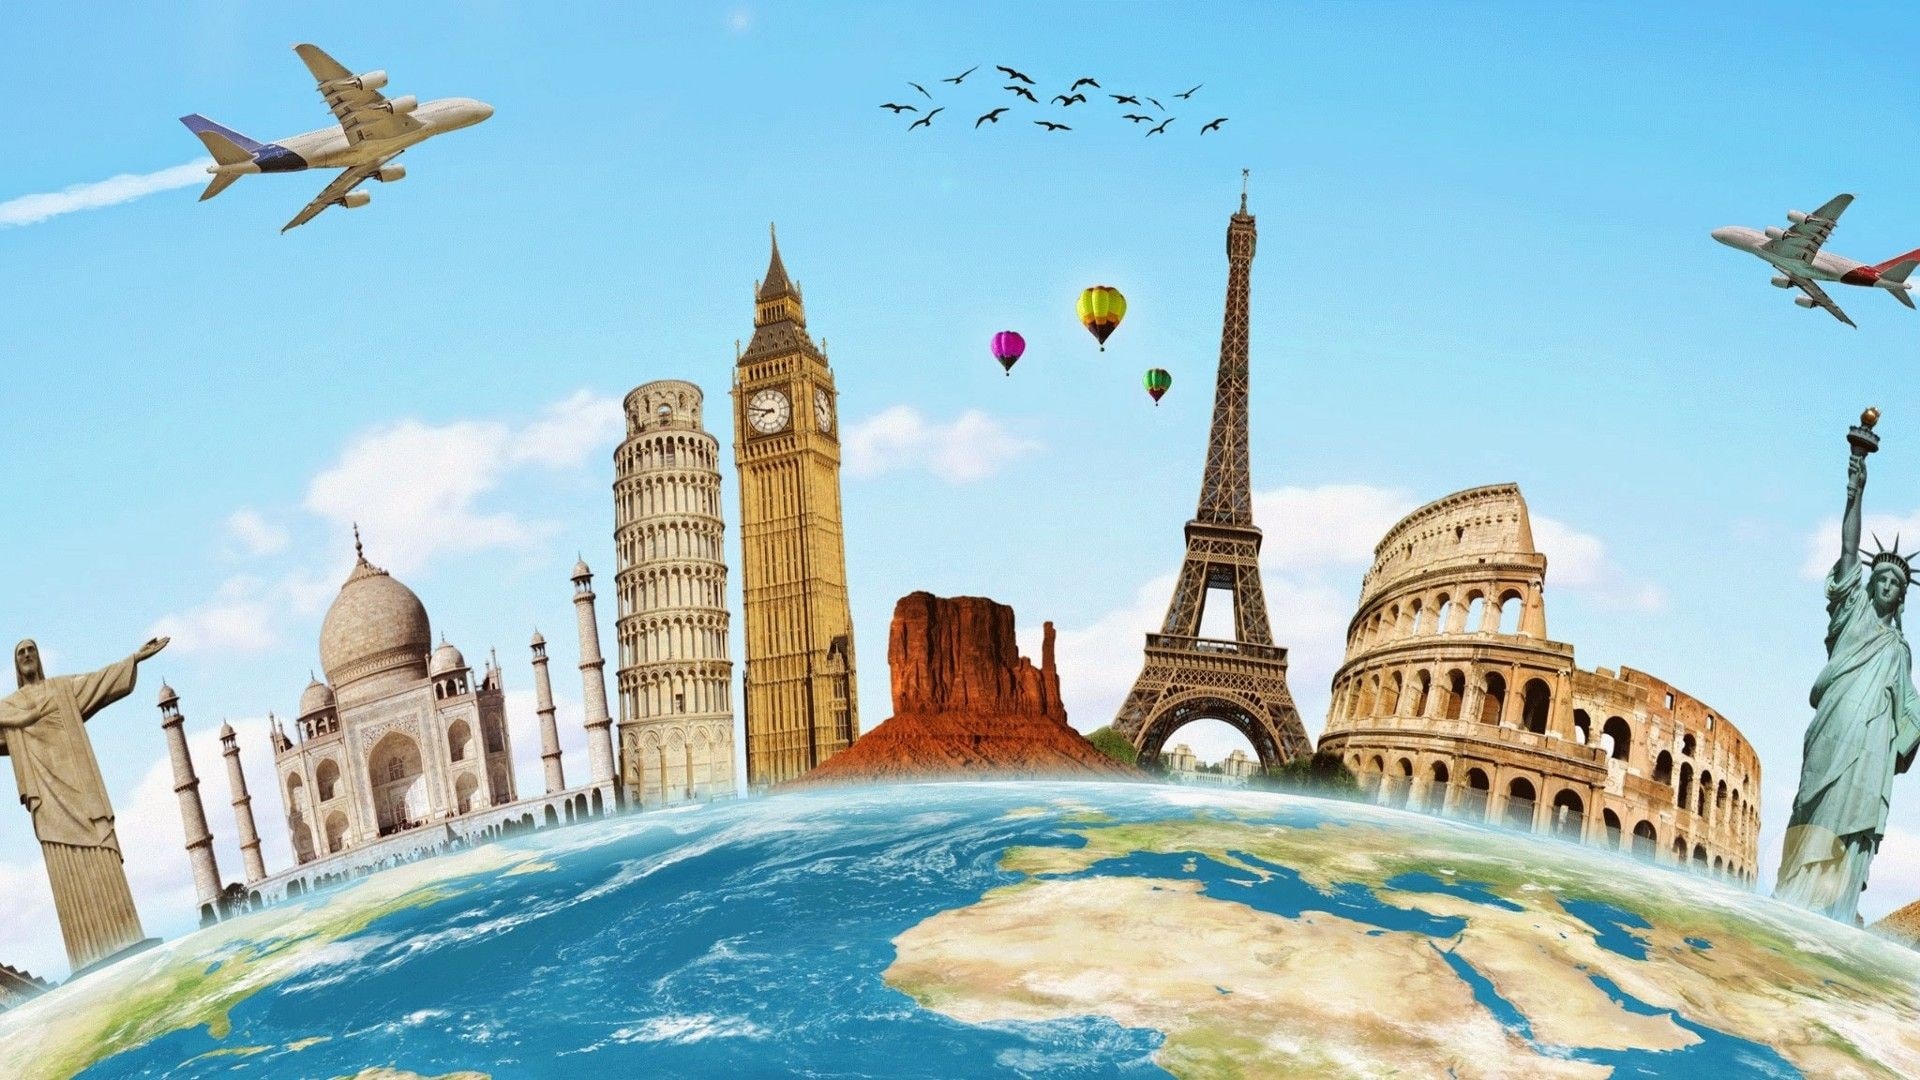 travel & tourism courses in surat